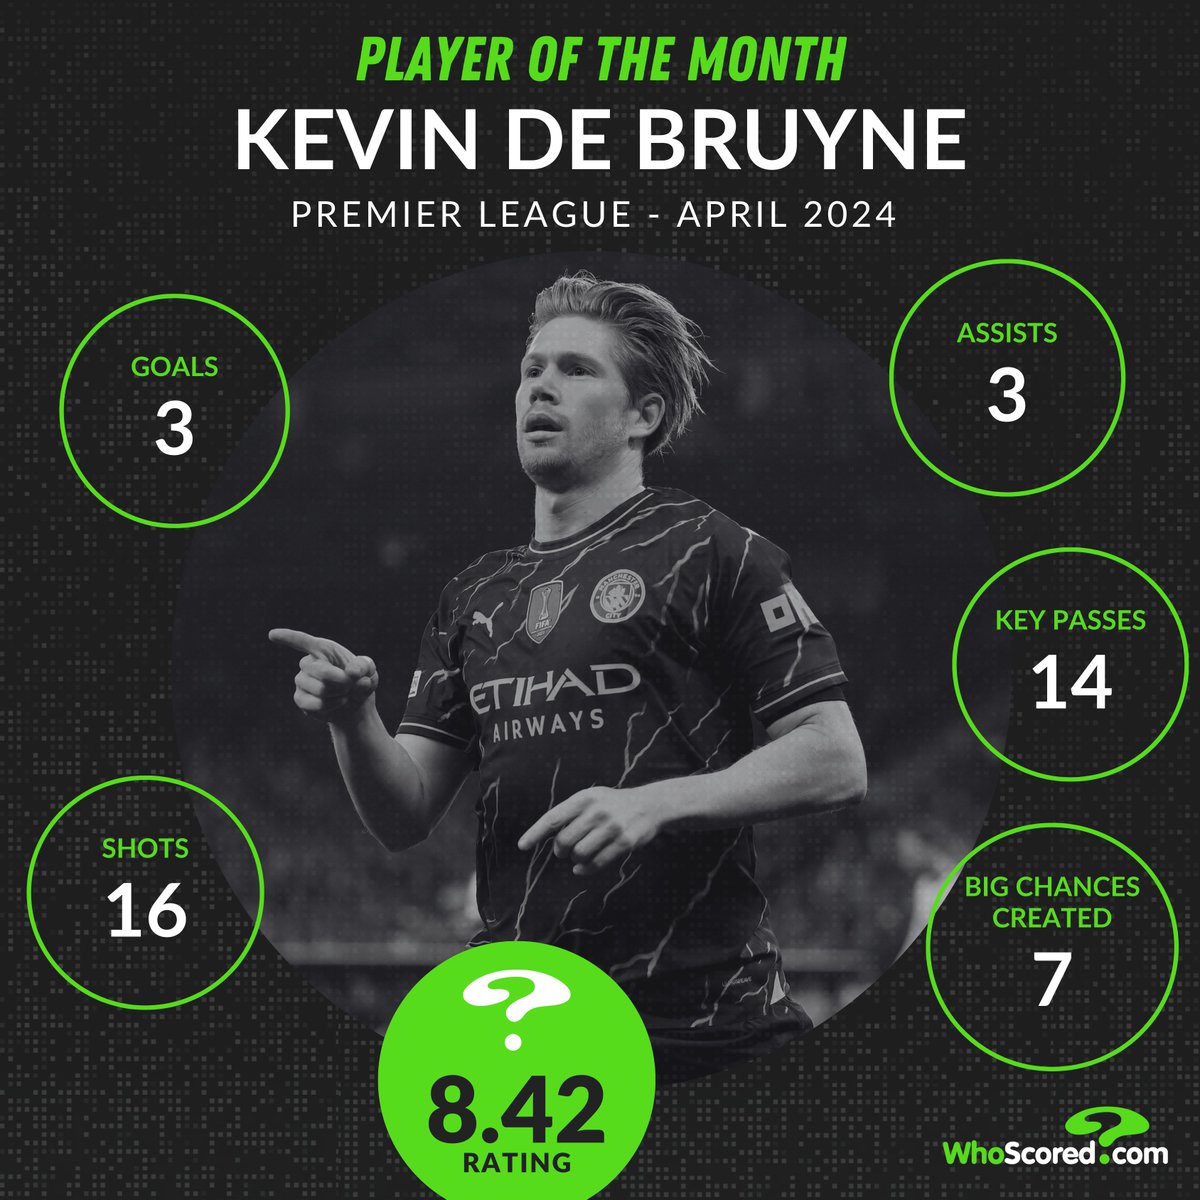 ⭐️ Premier League Player of the Month - @KevinDeBruyne

#PL | #ManCity